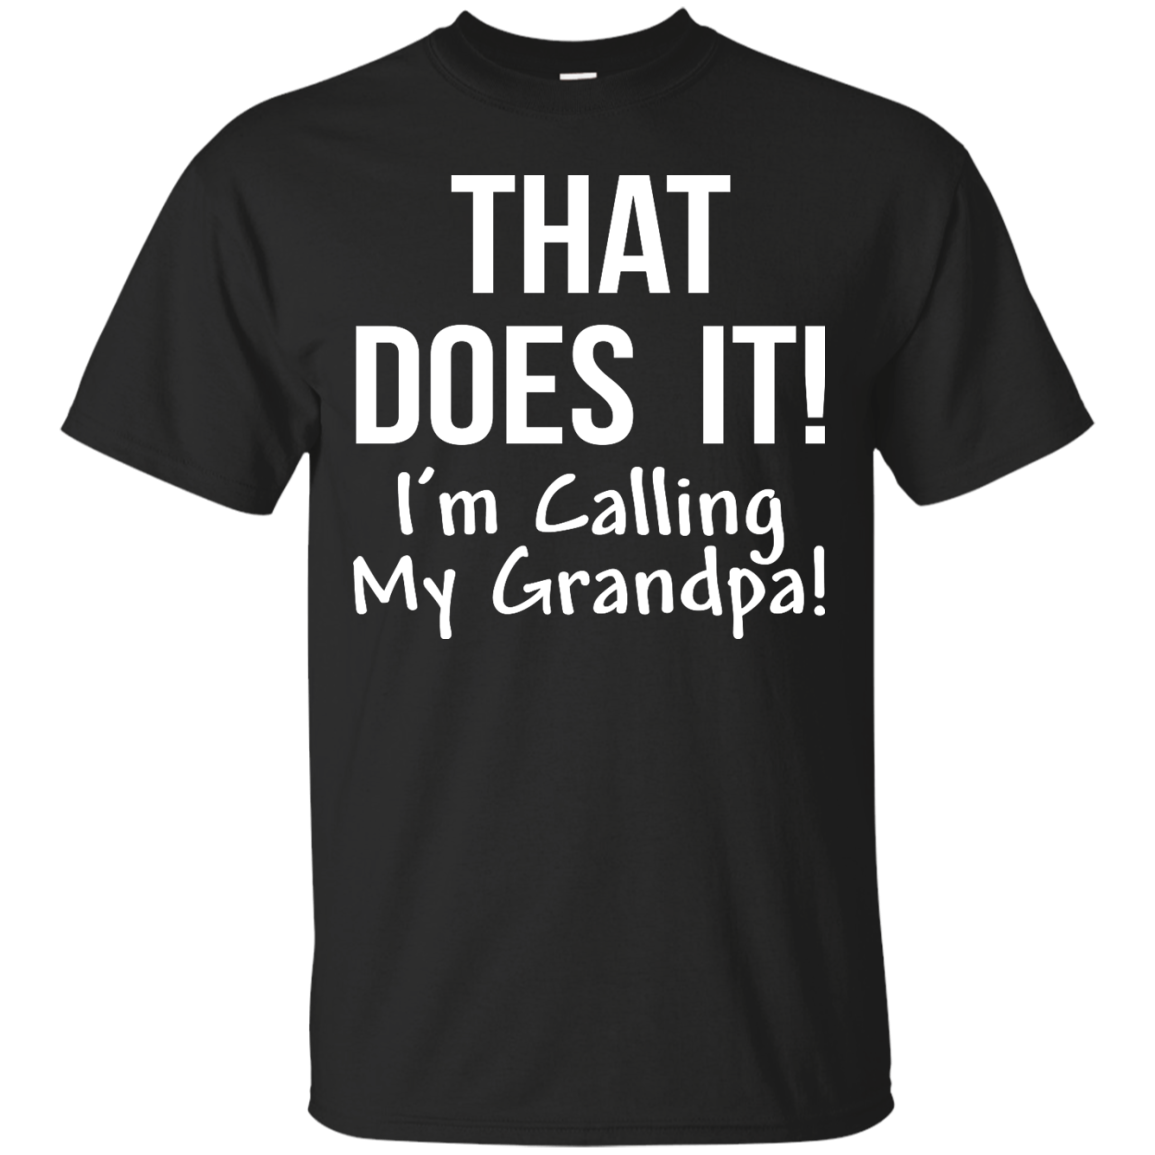 That Does It! I'm Calling My Grandpa kid shirt